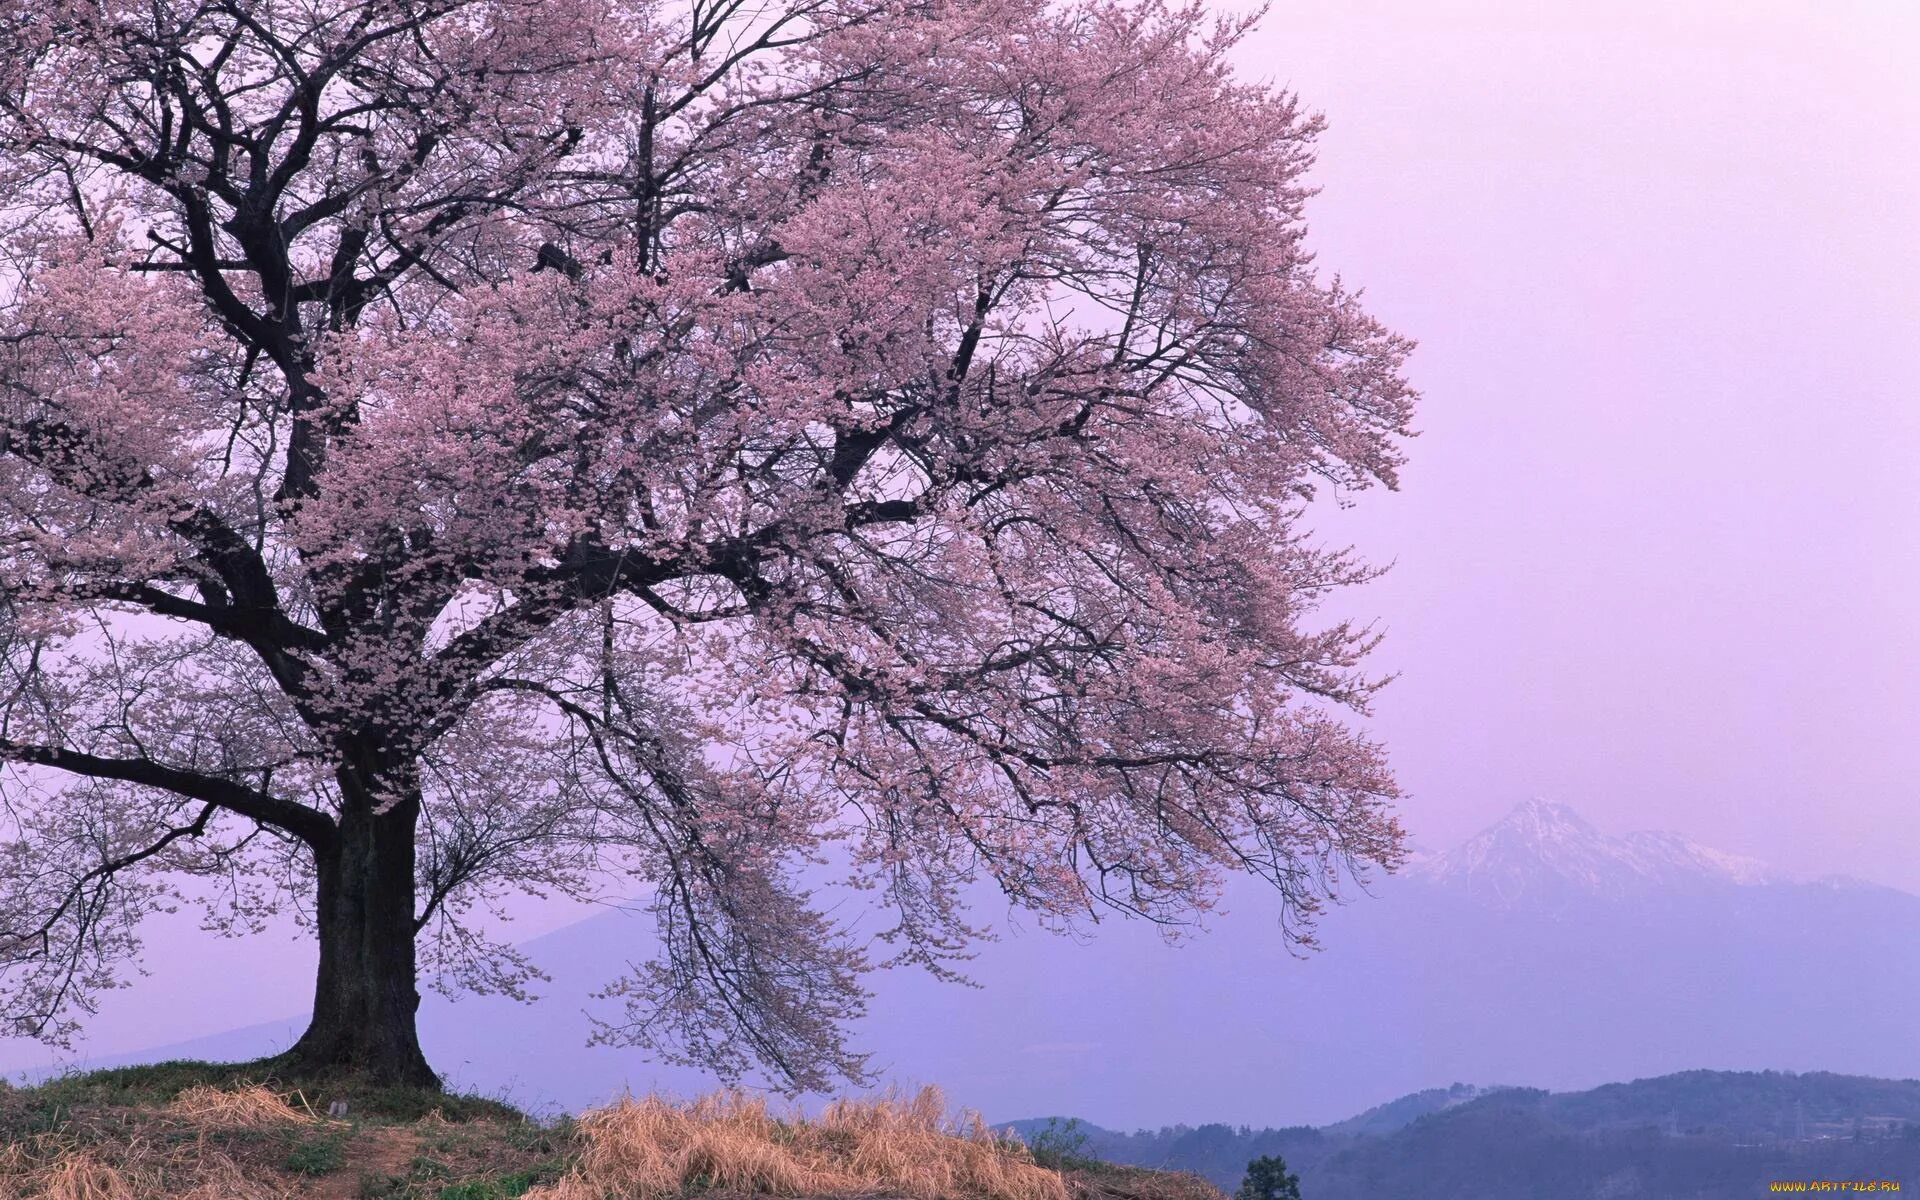 Сакура дерево. Деревья в Японии. Сакура одно дерево. Одинокое дерево Сакуры.